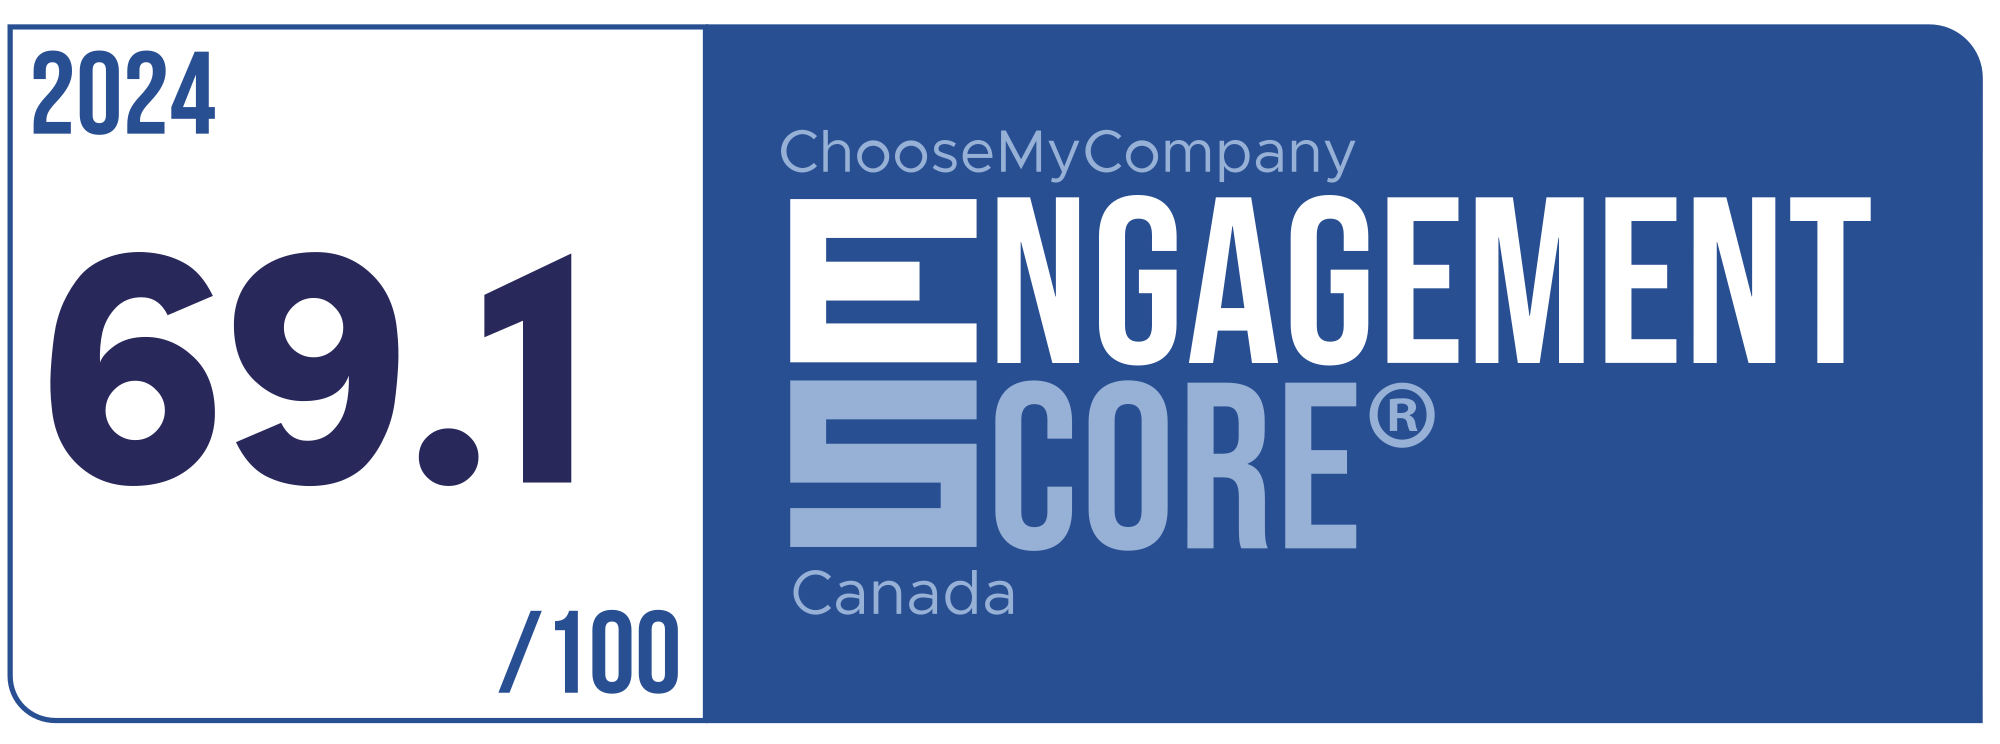 Label Engagement Score 2024 Canada